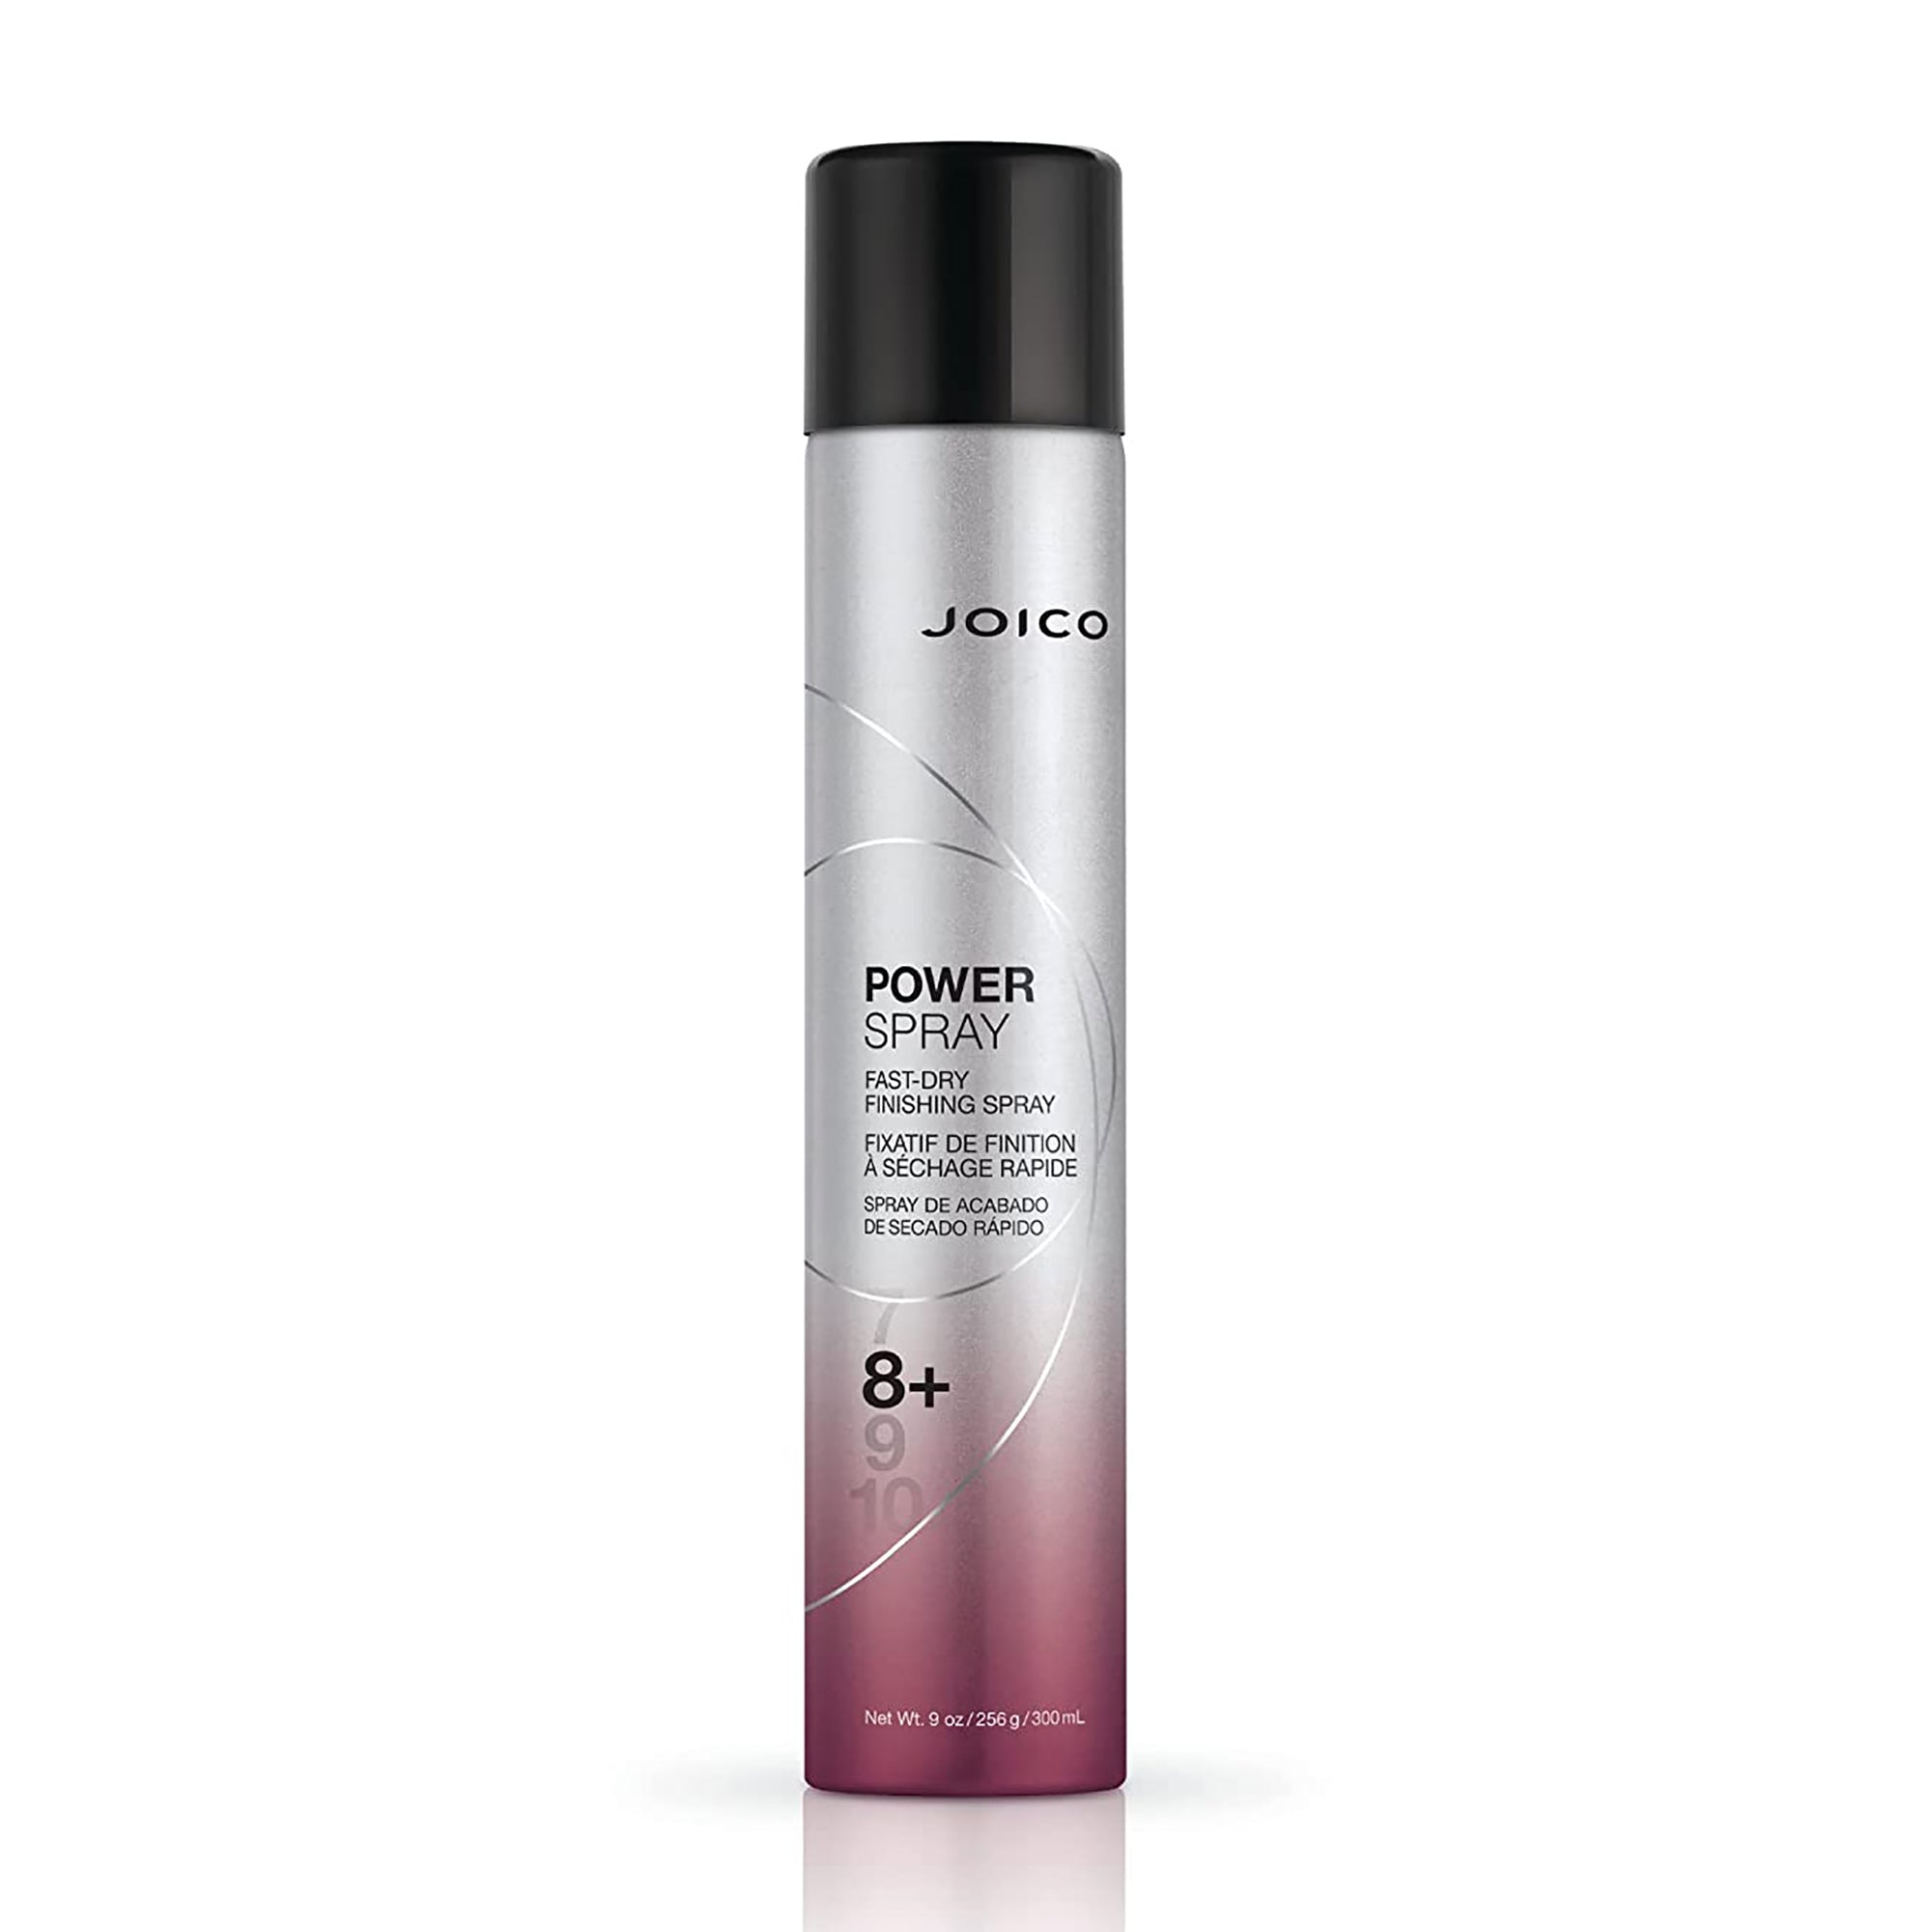 Joico Power Spray Fast-Dry Finishing Spray / 9OZ